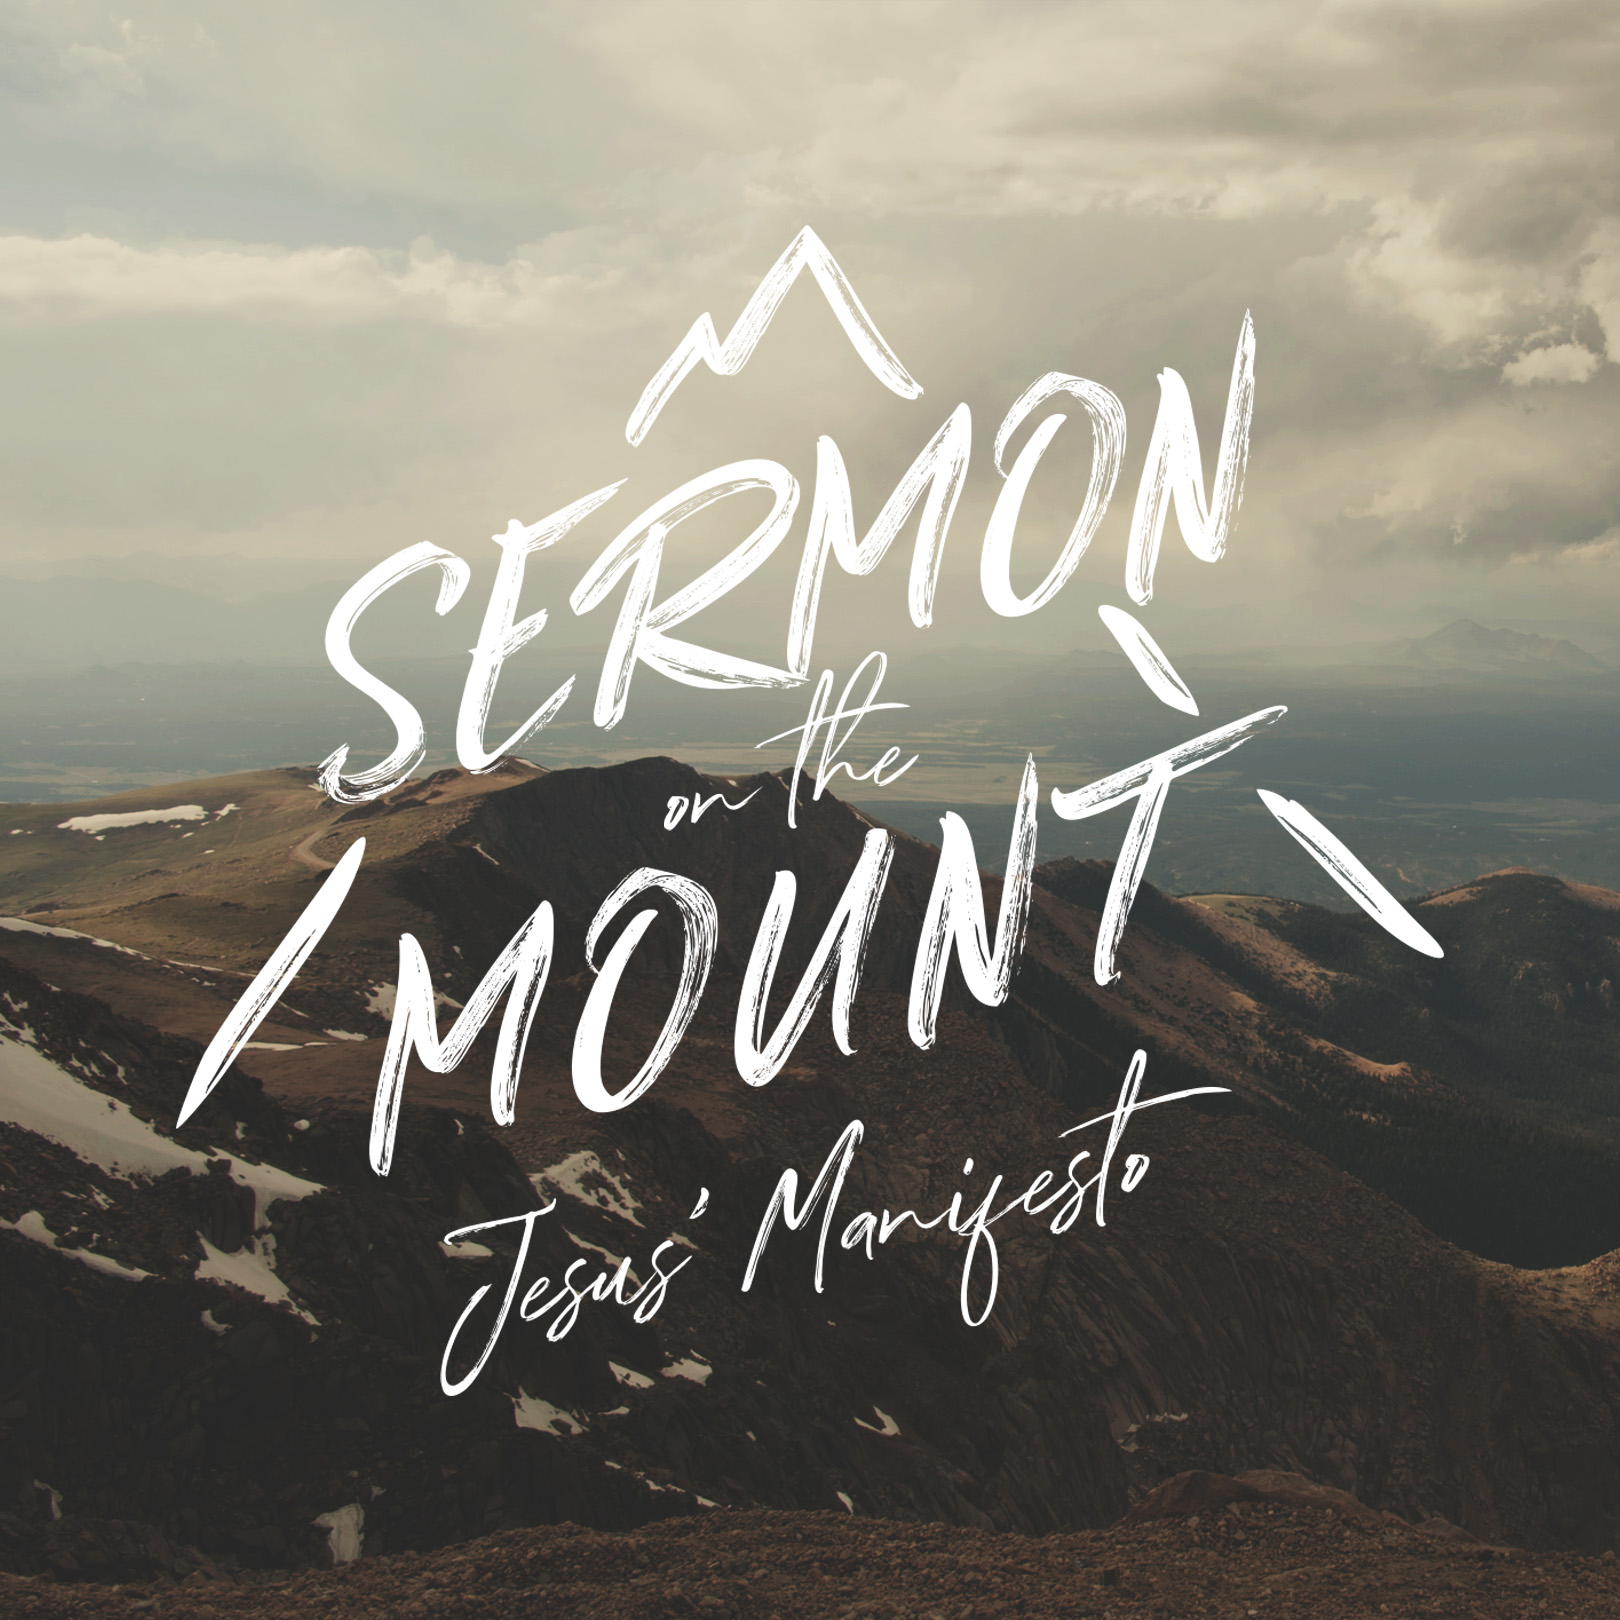 Sermon on the Mount - Jesus' Manifesto